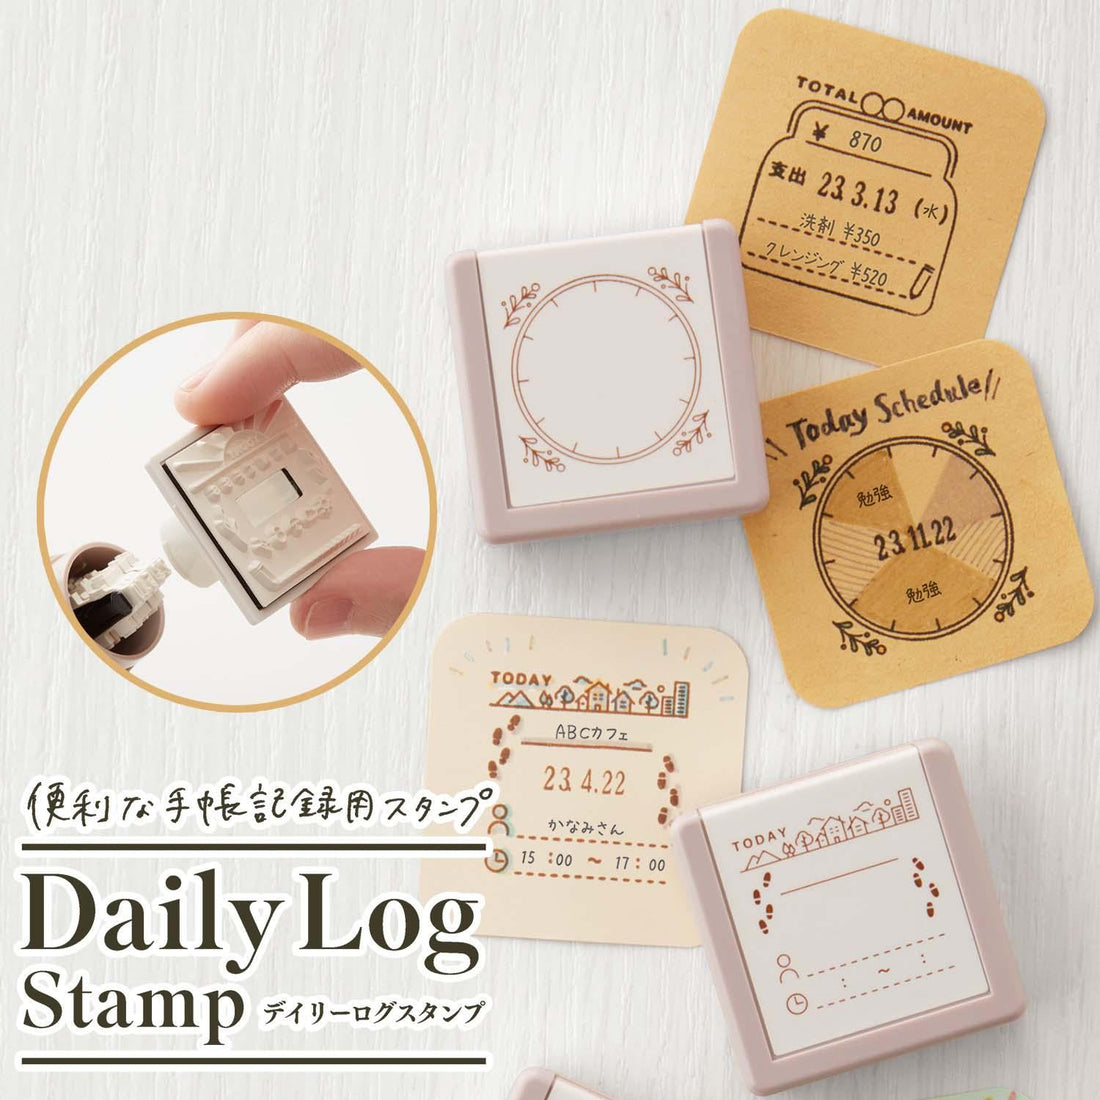 Daily Log Stamp - To Do List - Techo Treats